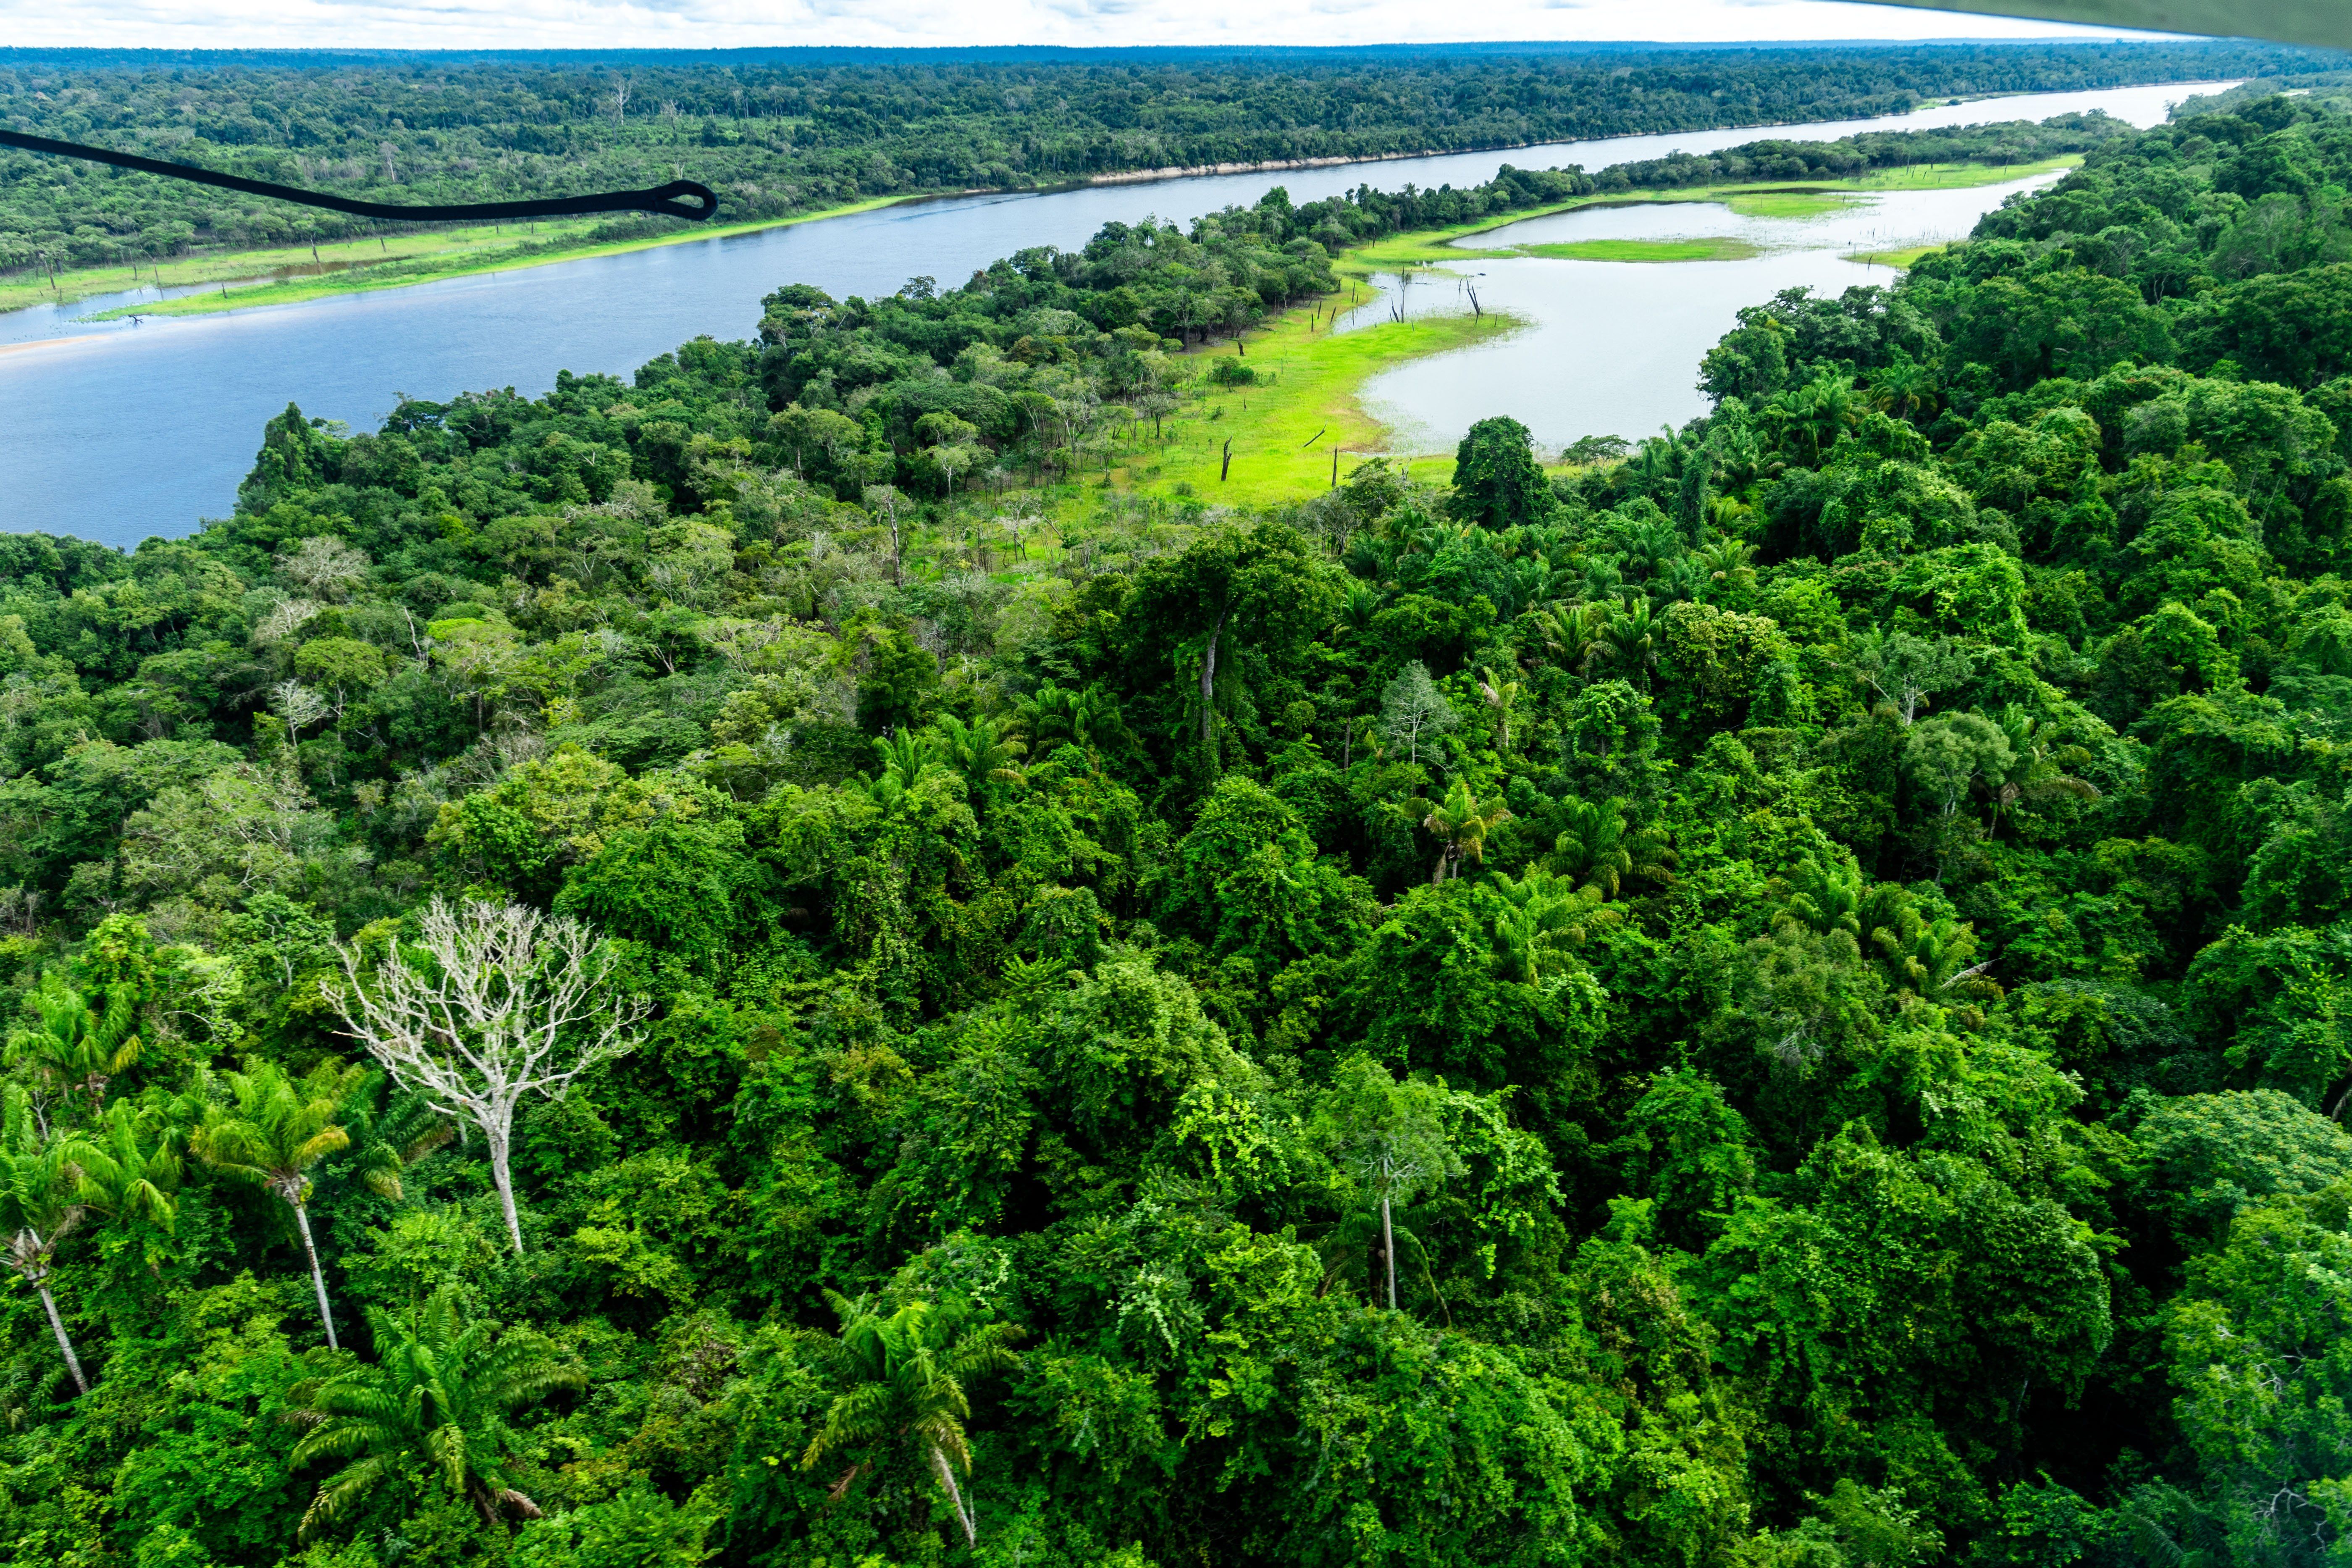 A river flows through the Amazon rainforest.